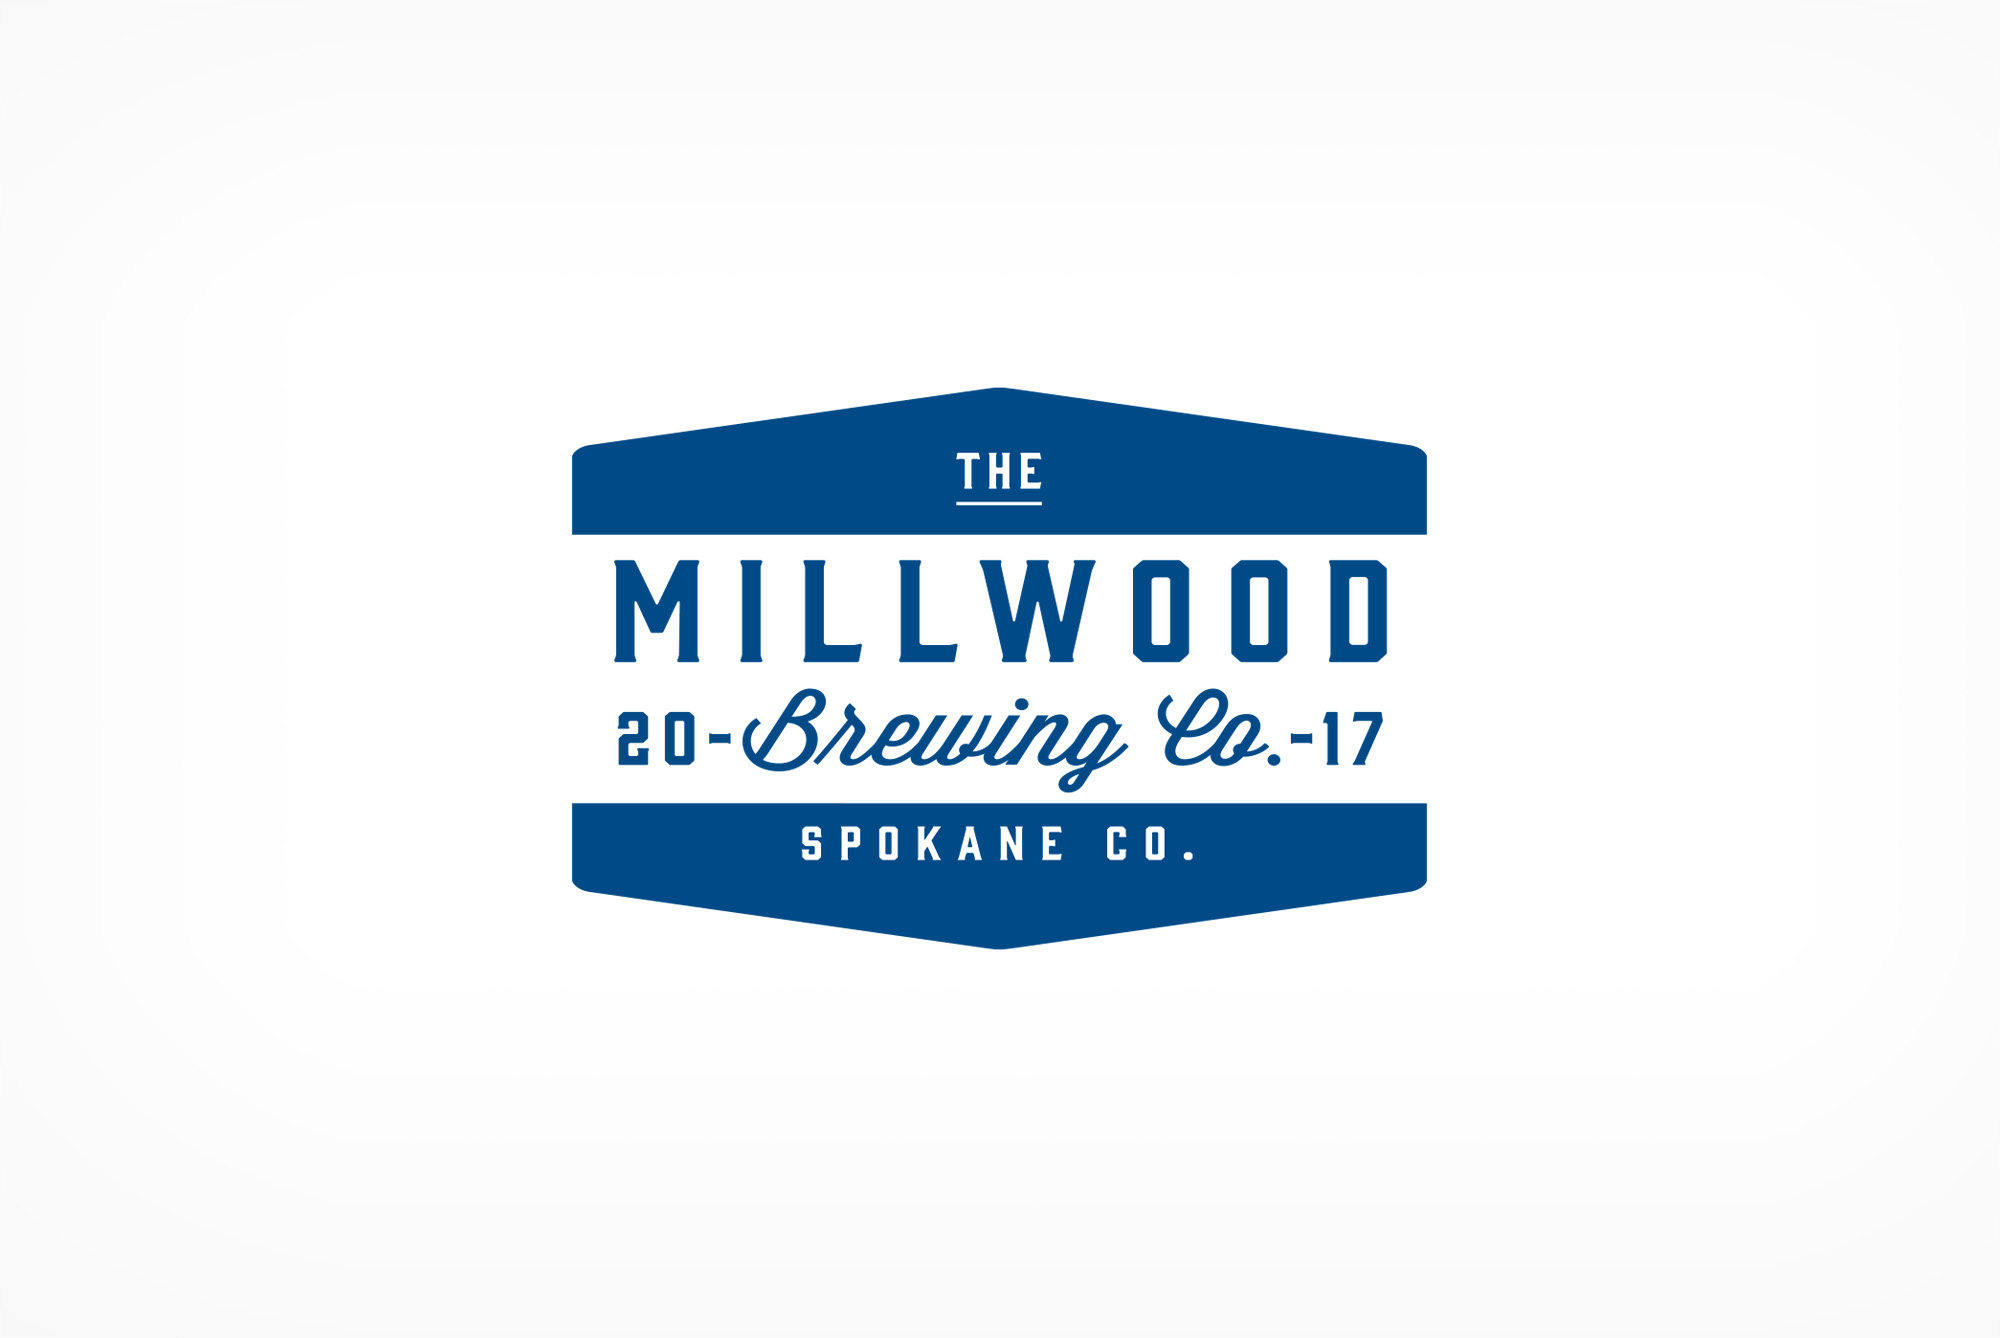 Millwood Washington based Millwood Brewing Company brand shield logo.